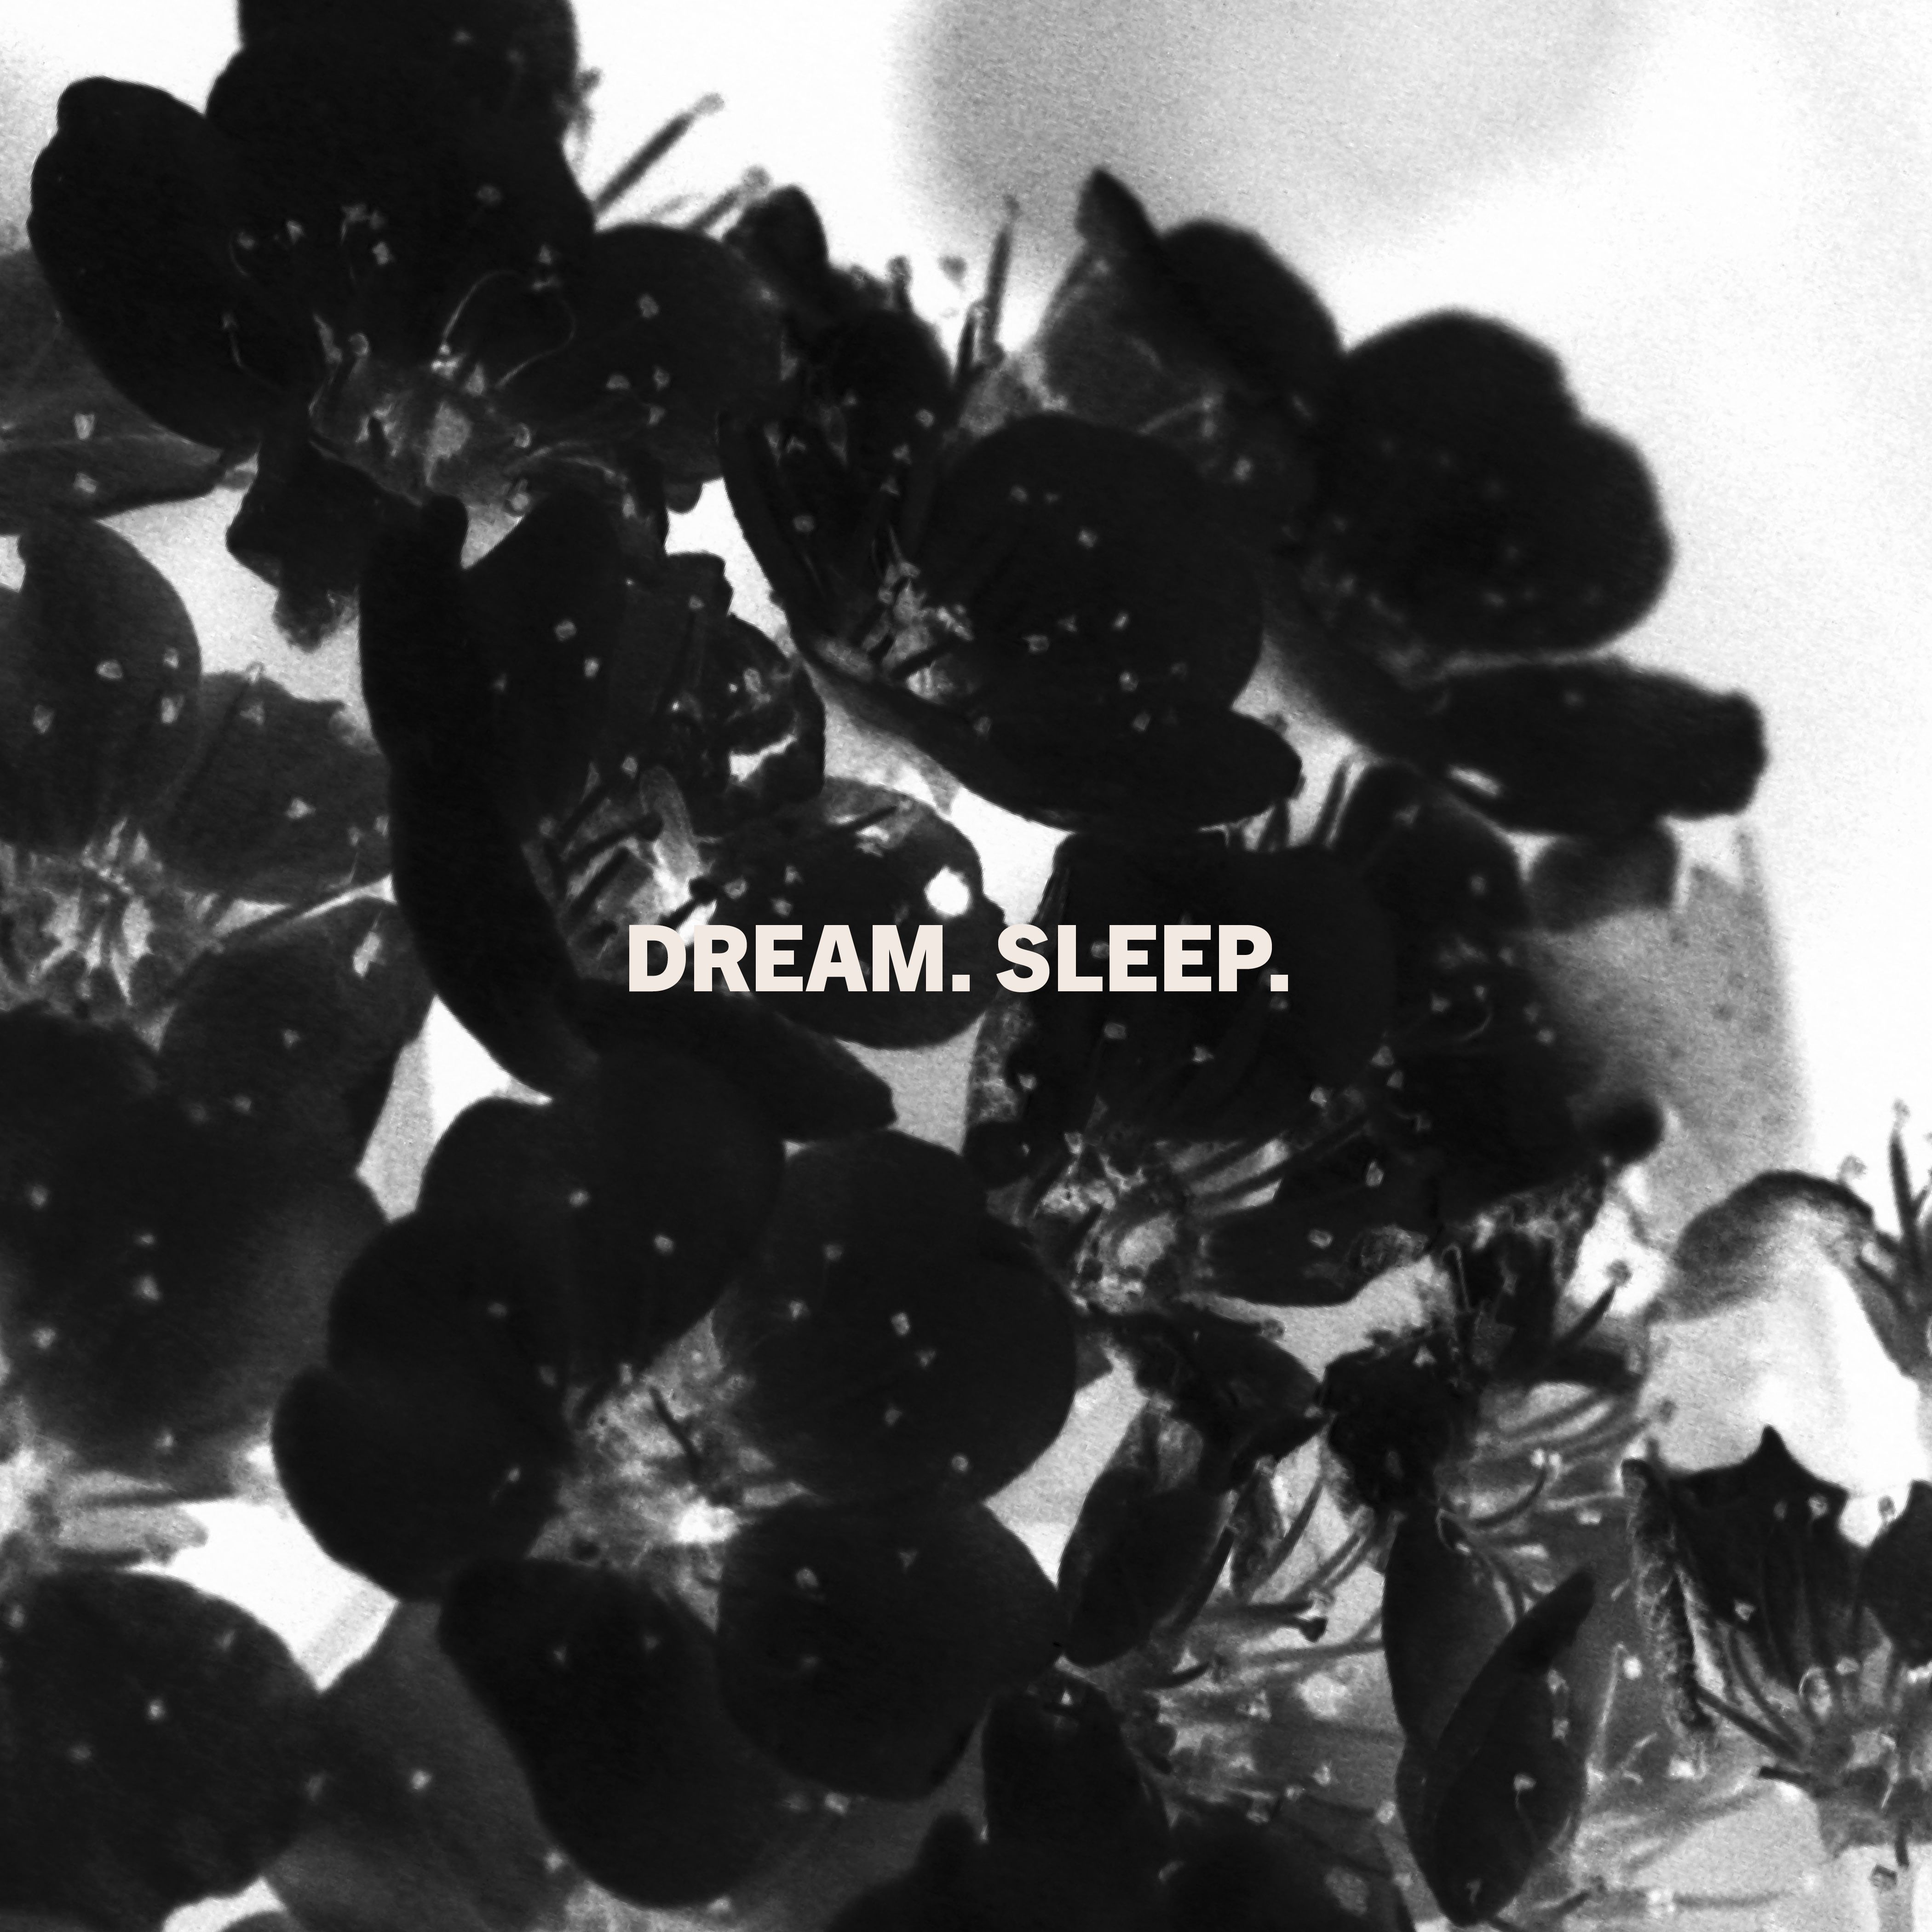 Laveda – “Dream. Sleep.”